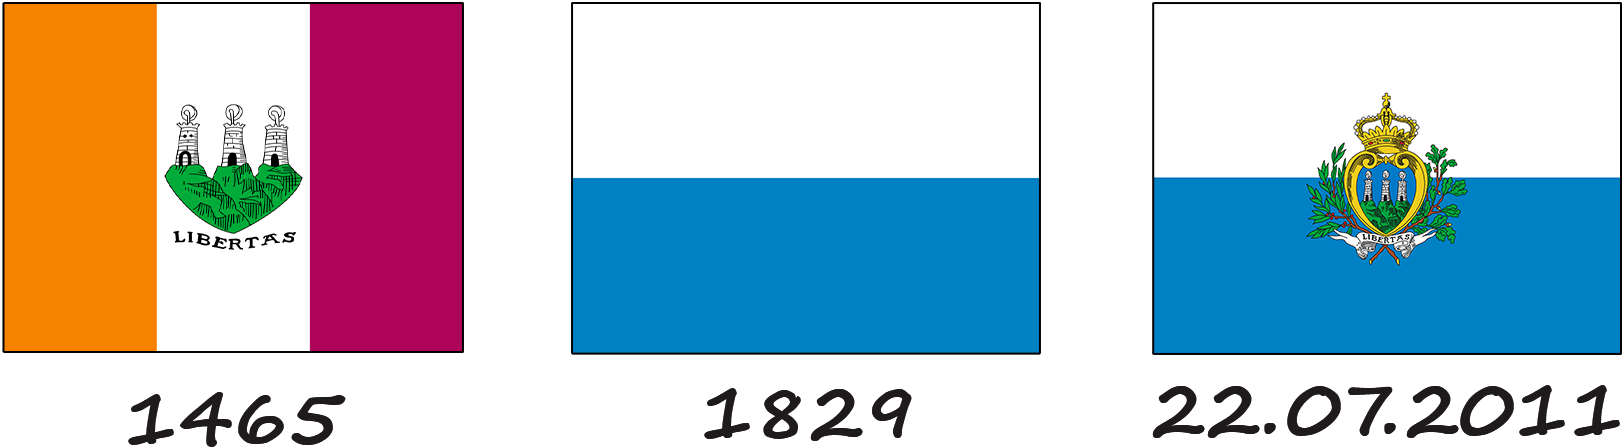 Historia de la bandera de San Marino